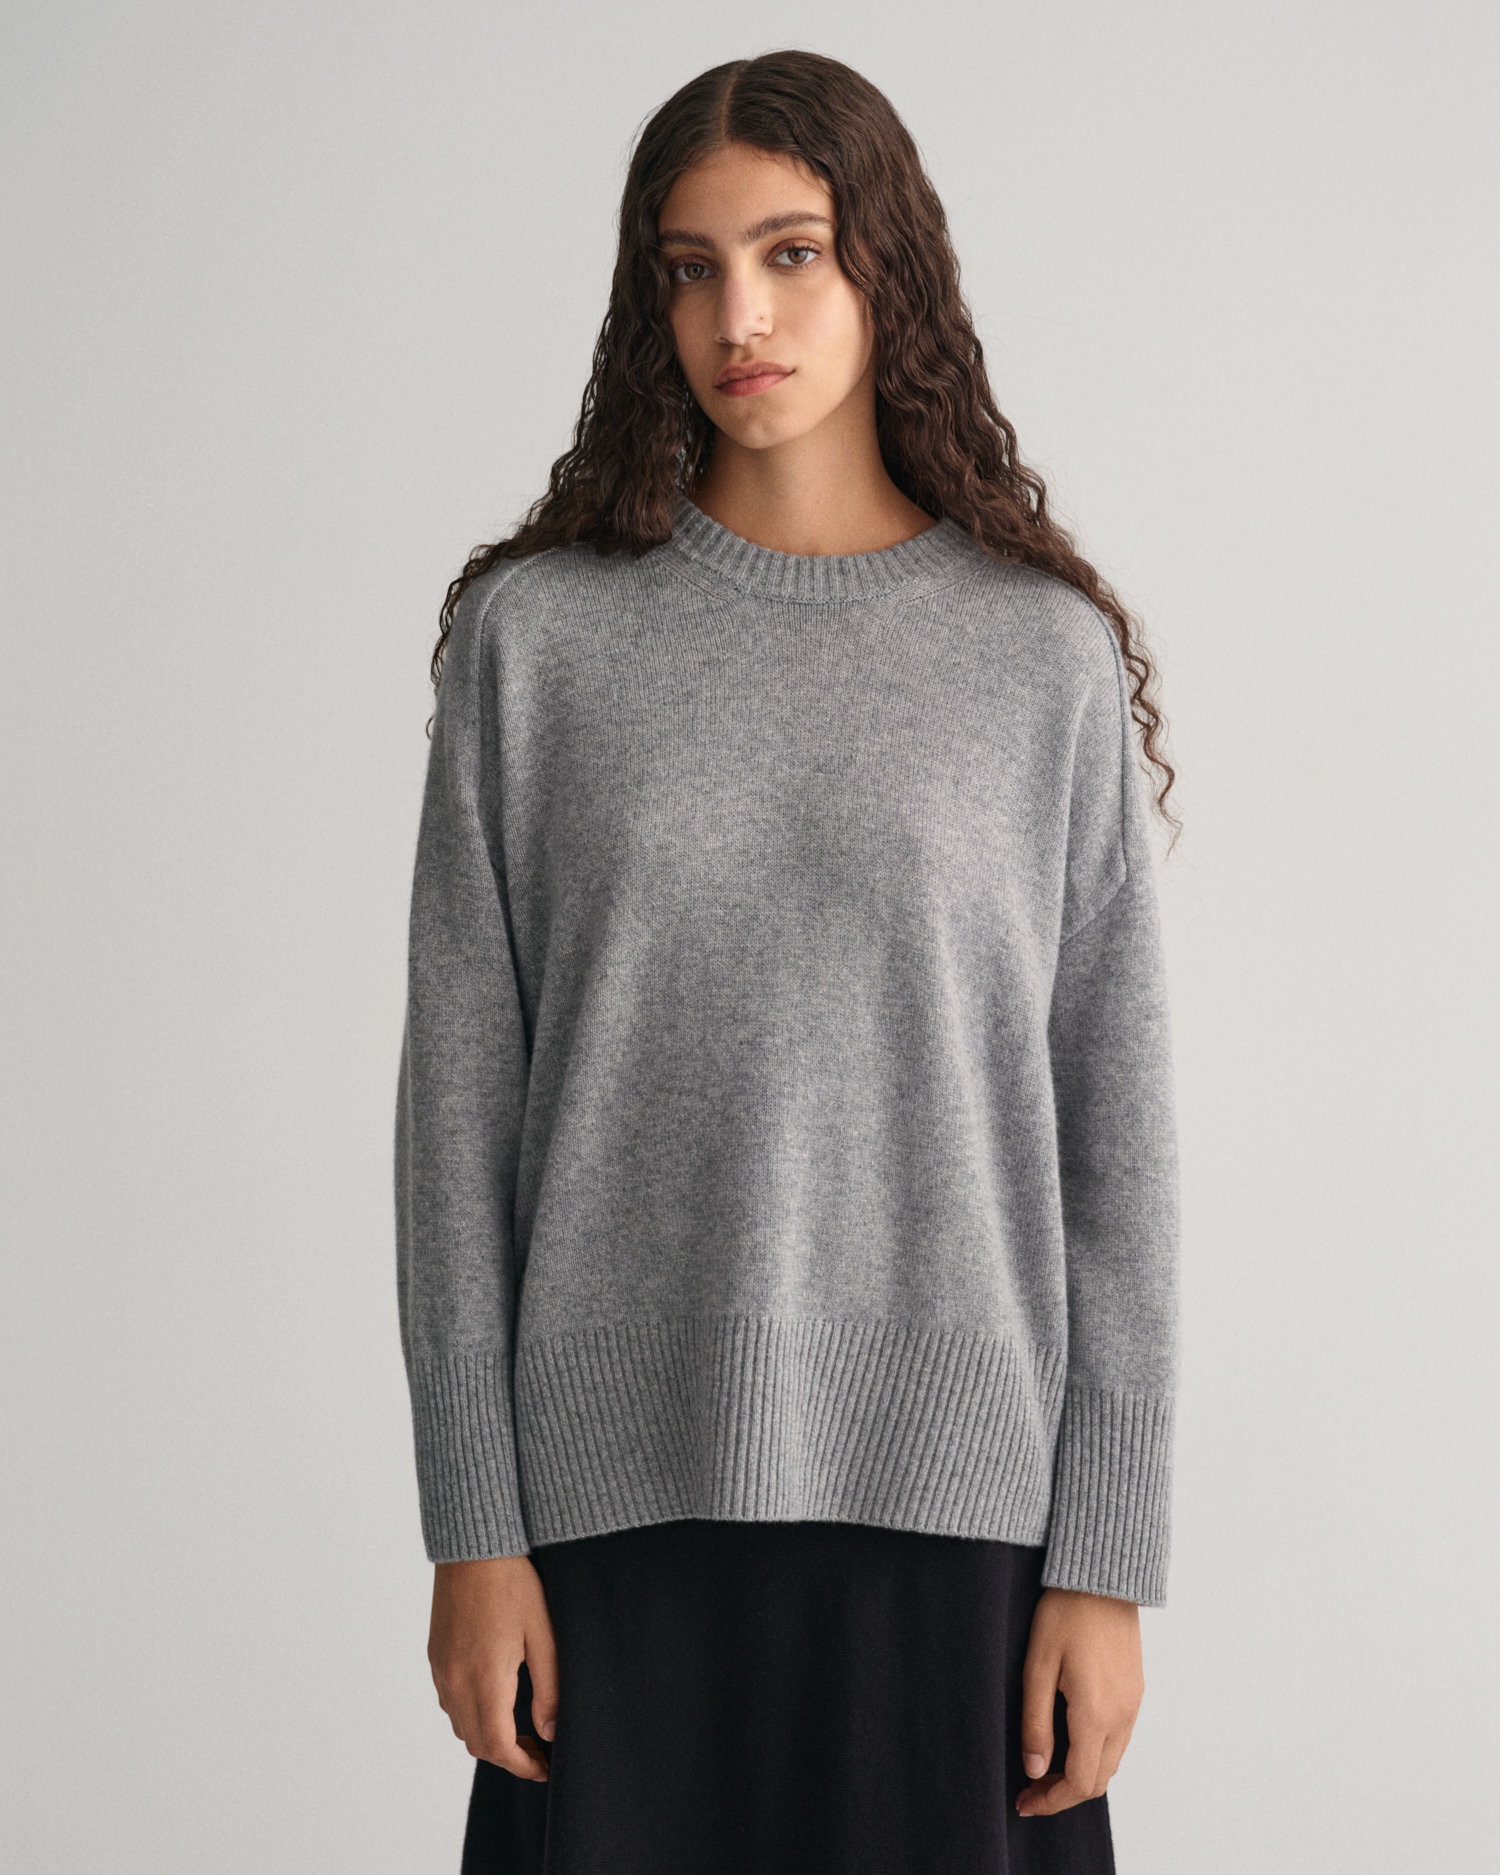 GANT Women Cashmere Crew Neck Sweater (M) Grey product